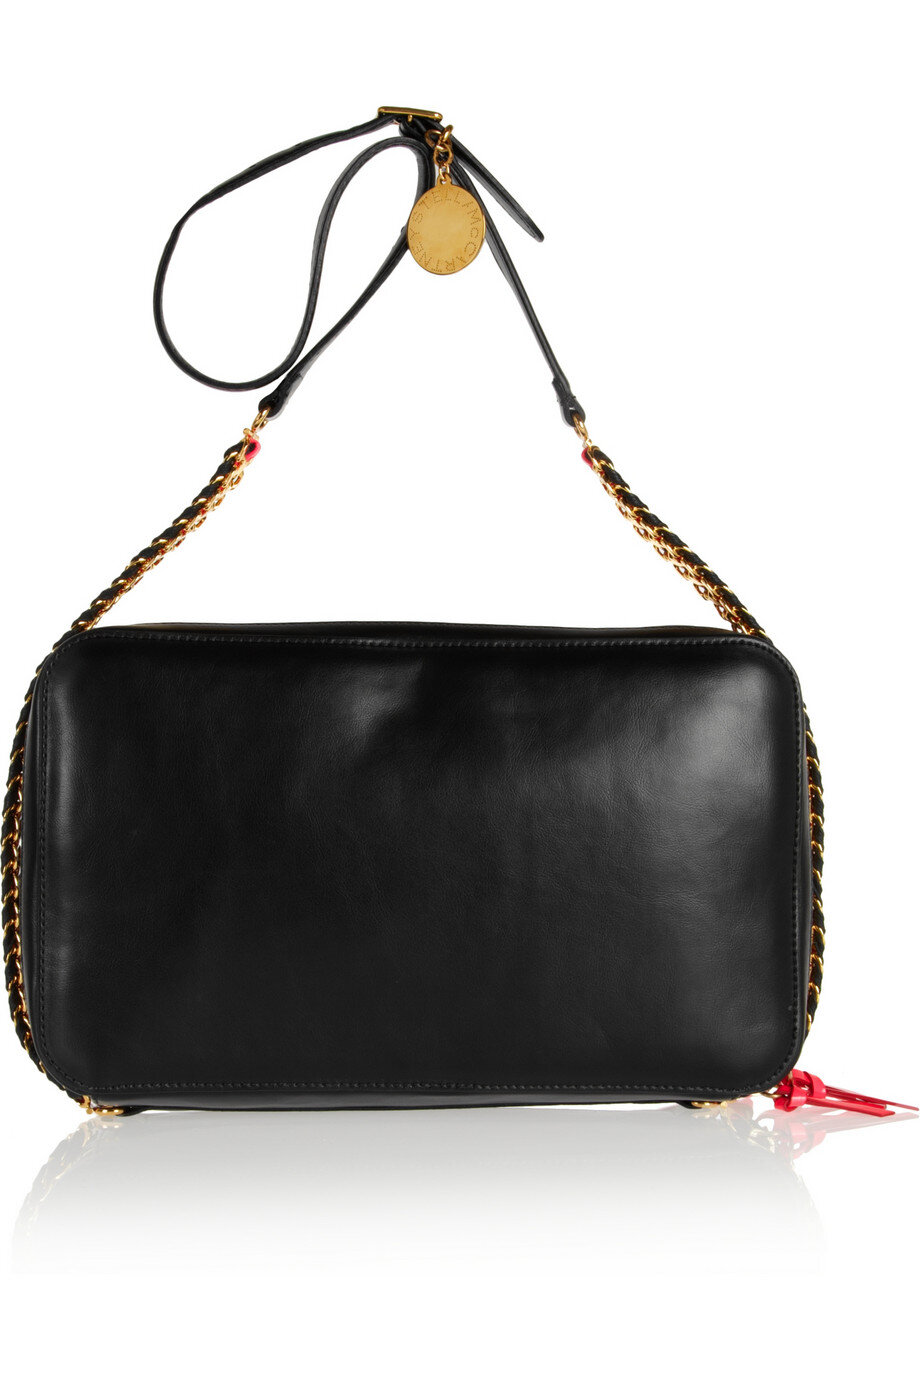 Stella McCartney Grace Shoulder Bag in Black Faux Leather.jpg